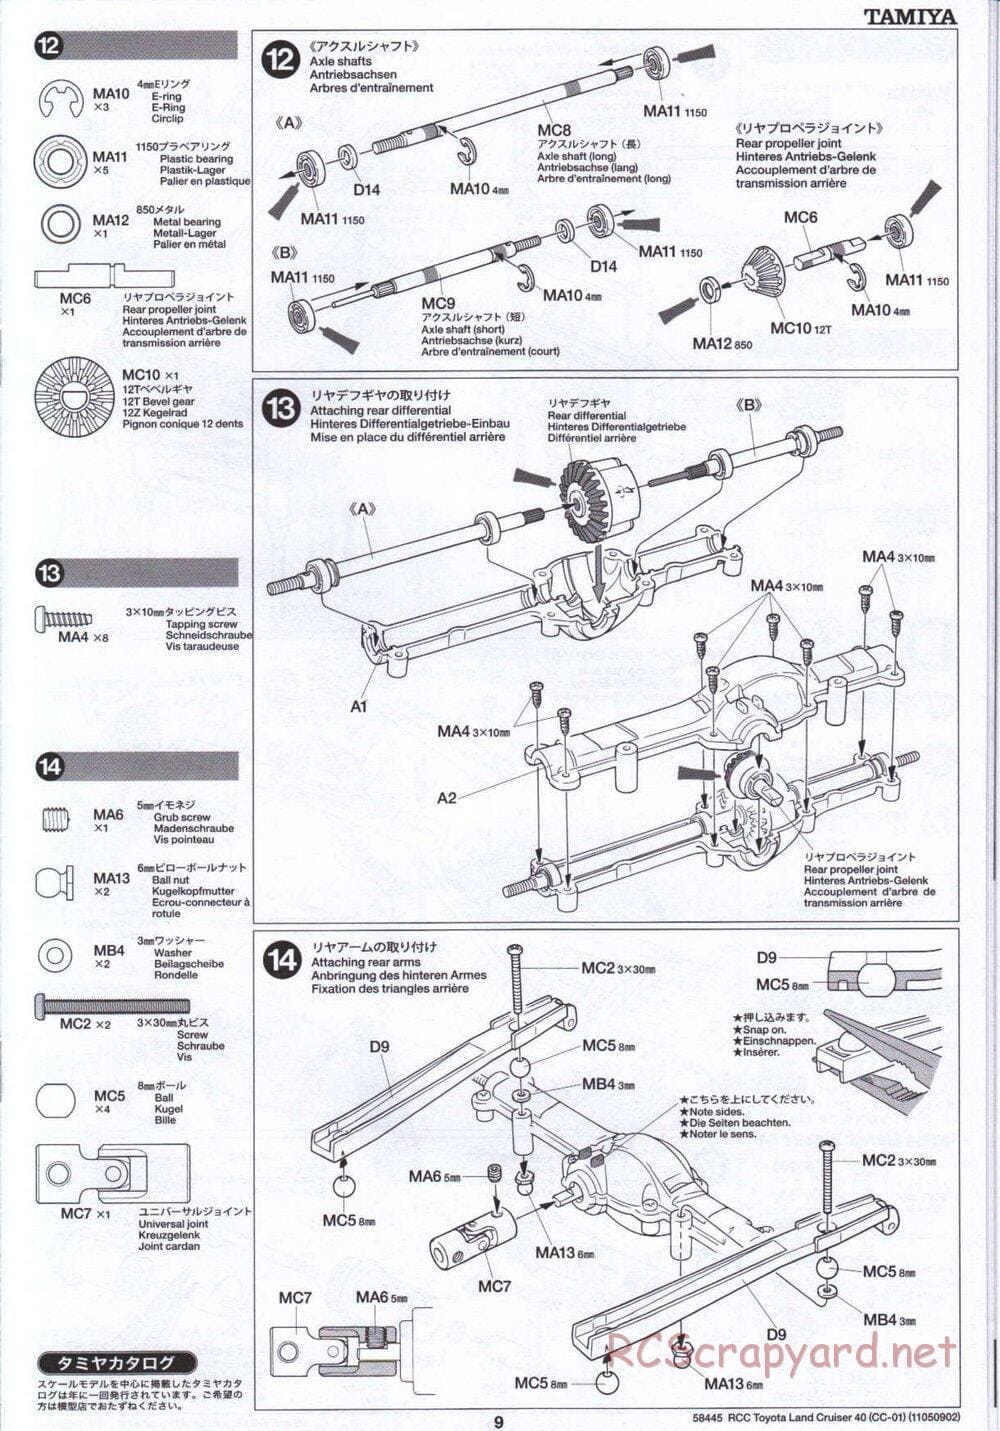 Tamiya - Toyota Land Cruiser 40 - CC-01 Chassis - Manual - Page 9